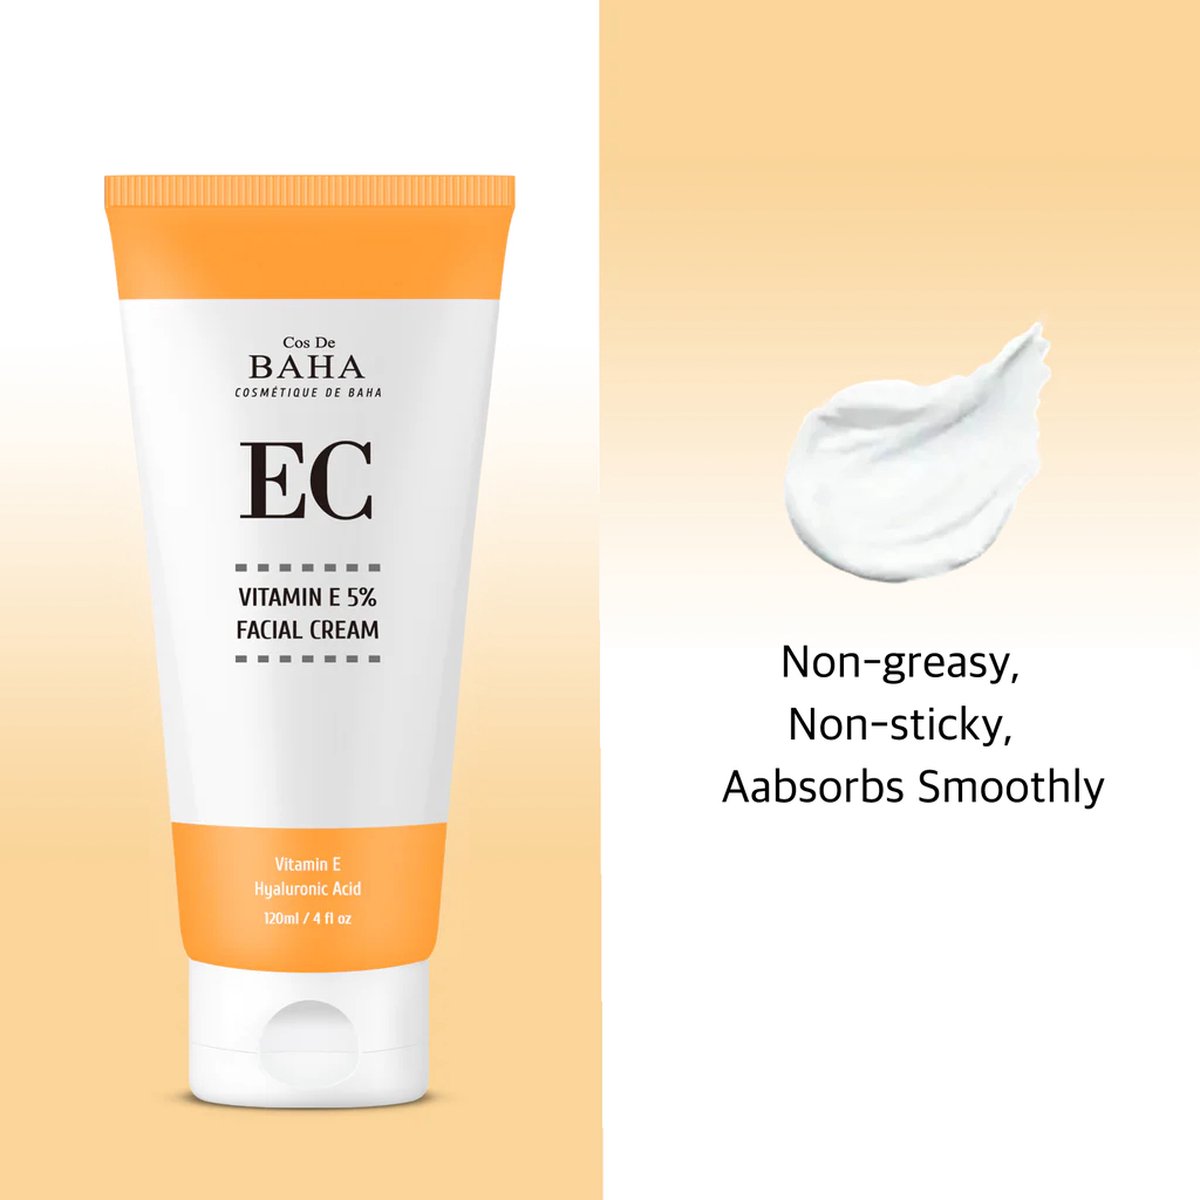 Cos de BAHA Vitamin E Tocopheryl Acetate 5% with Niacinamide - EC - Large Size 120 ml - Facial Cream - Anti Aging - Heals and Repairs Skin + Optimal Skin Health for Face - Korean K Beauty Vitamine E Huidverzorging